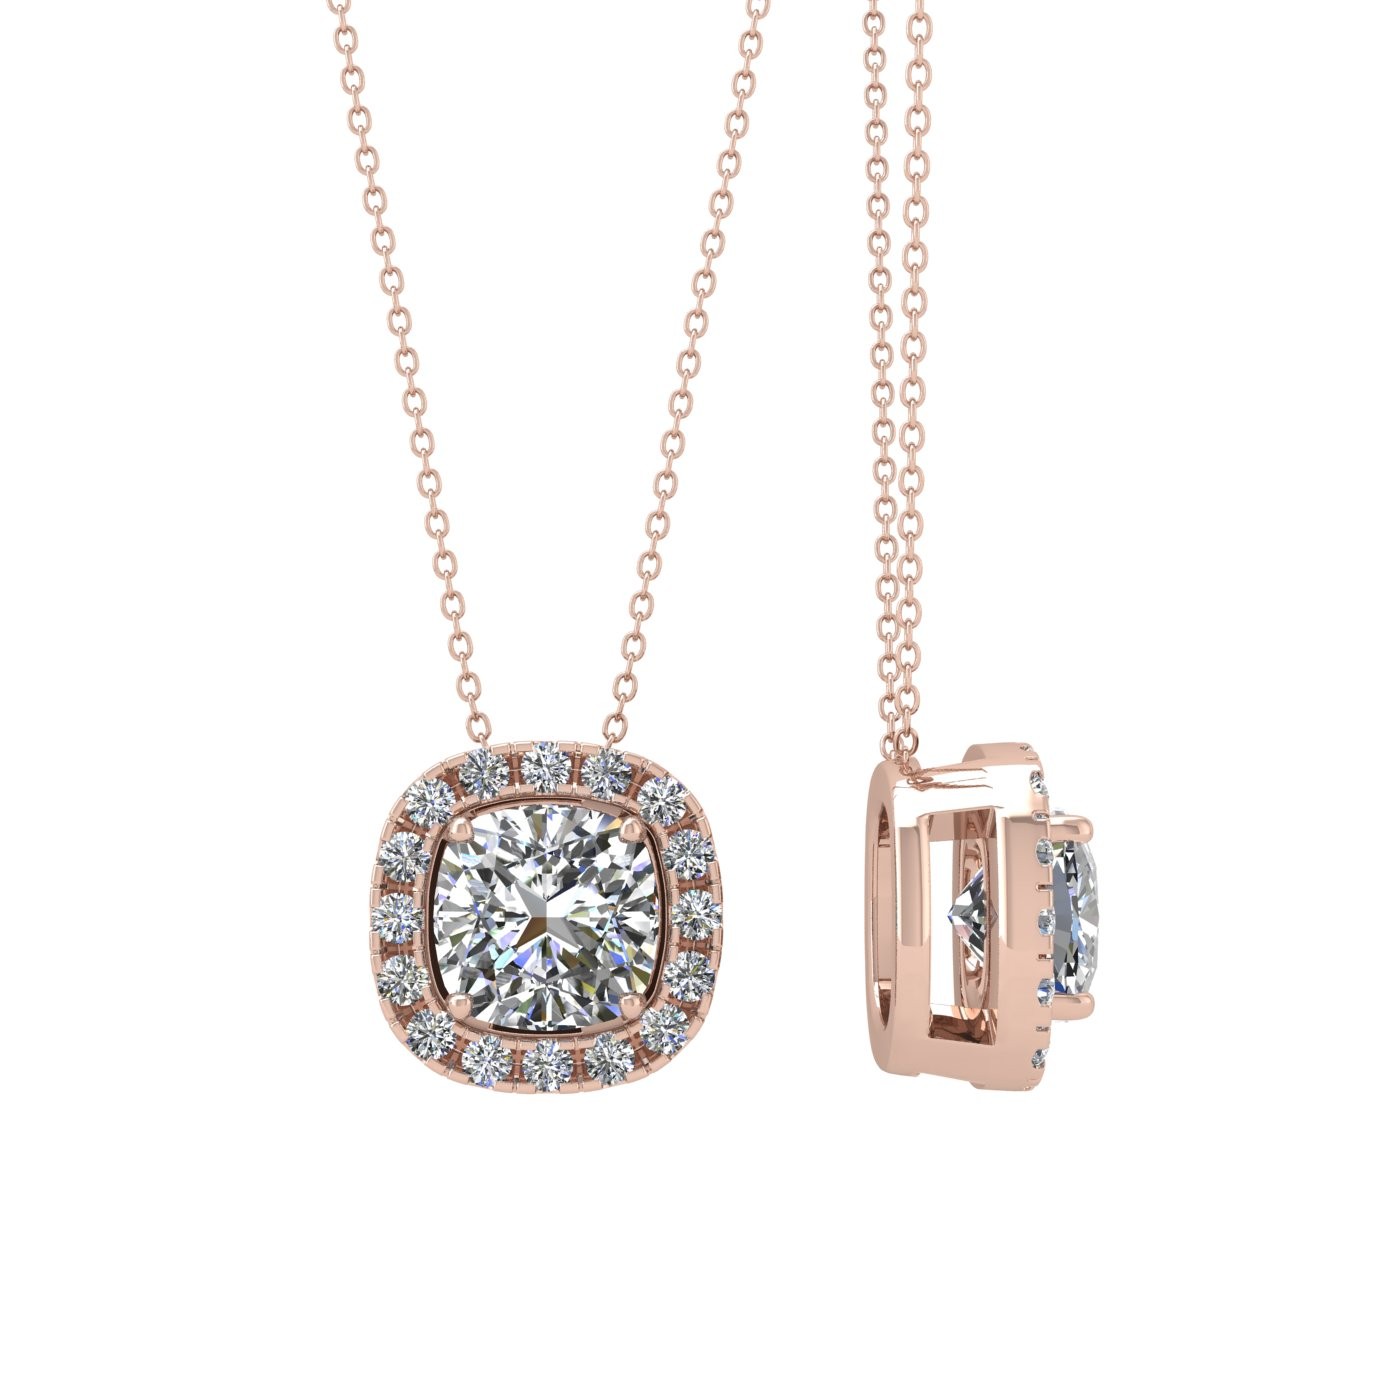 18k white gold  0,7 ct 4 prongs cushion shape diamond pendant with diamond pavÉ set halo Photos & images